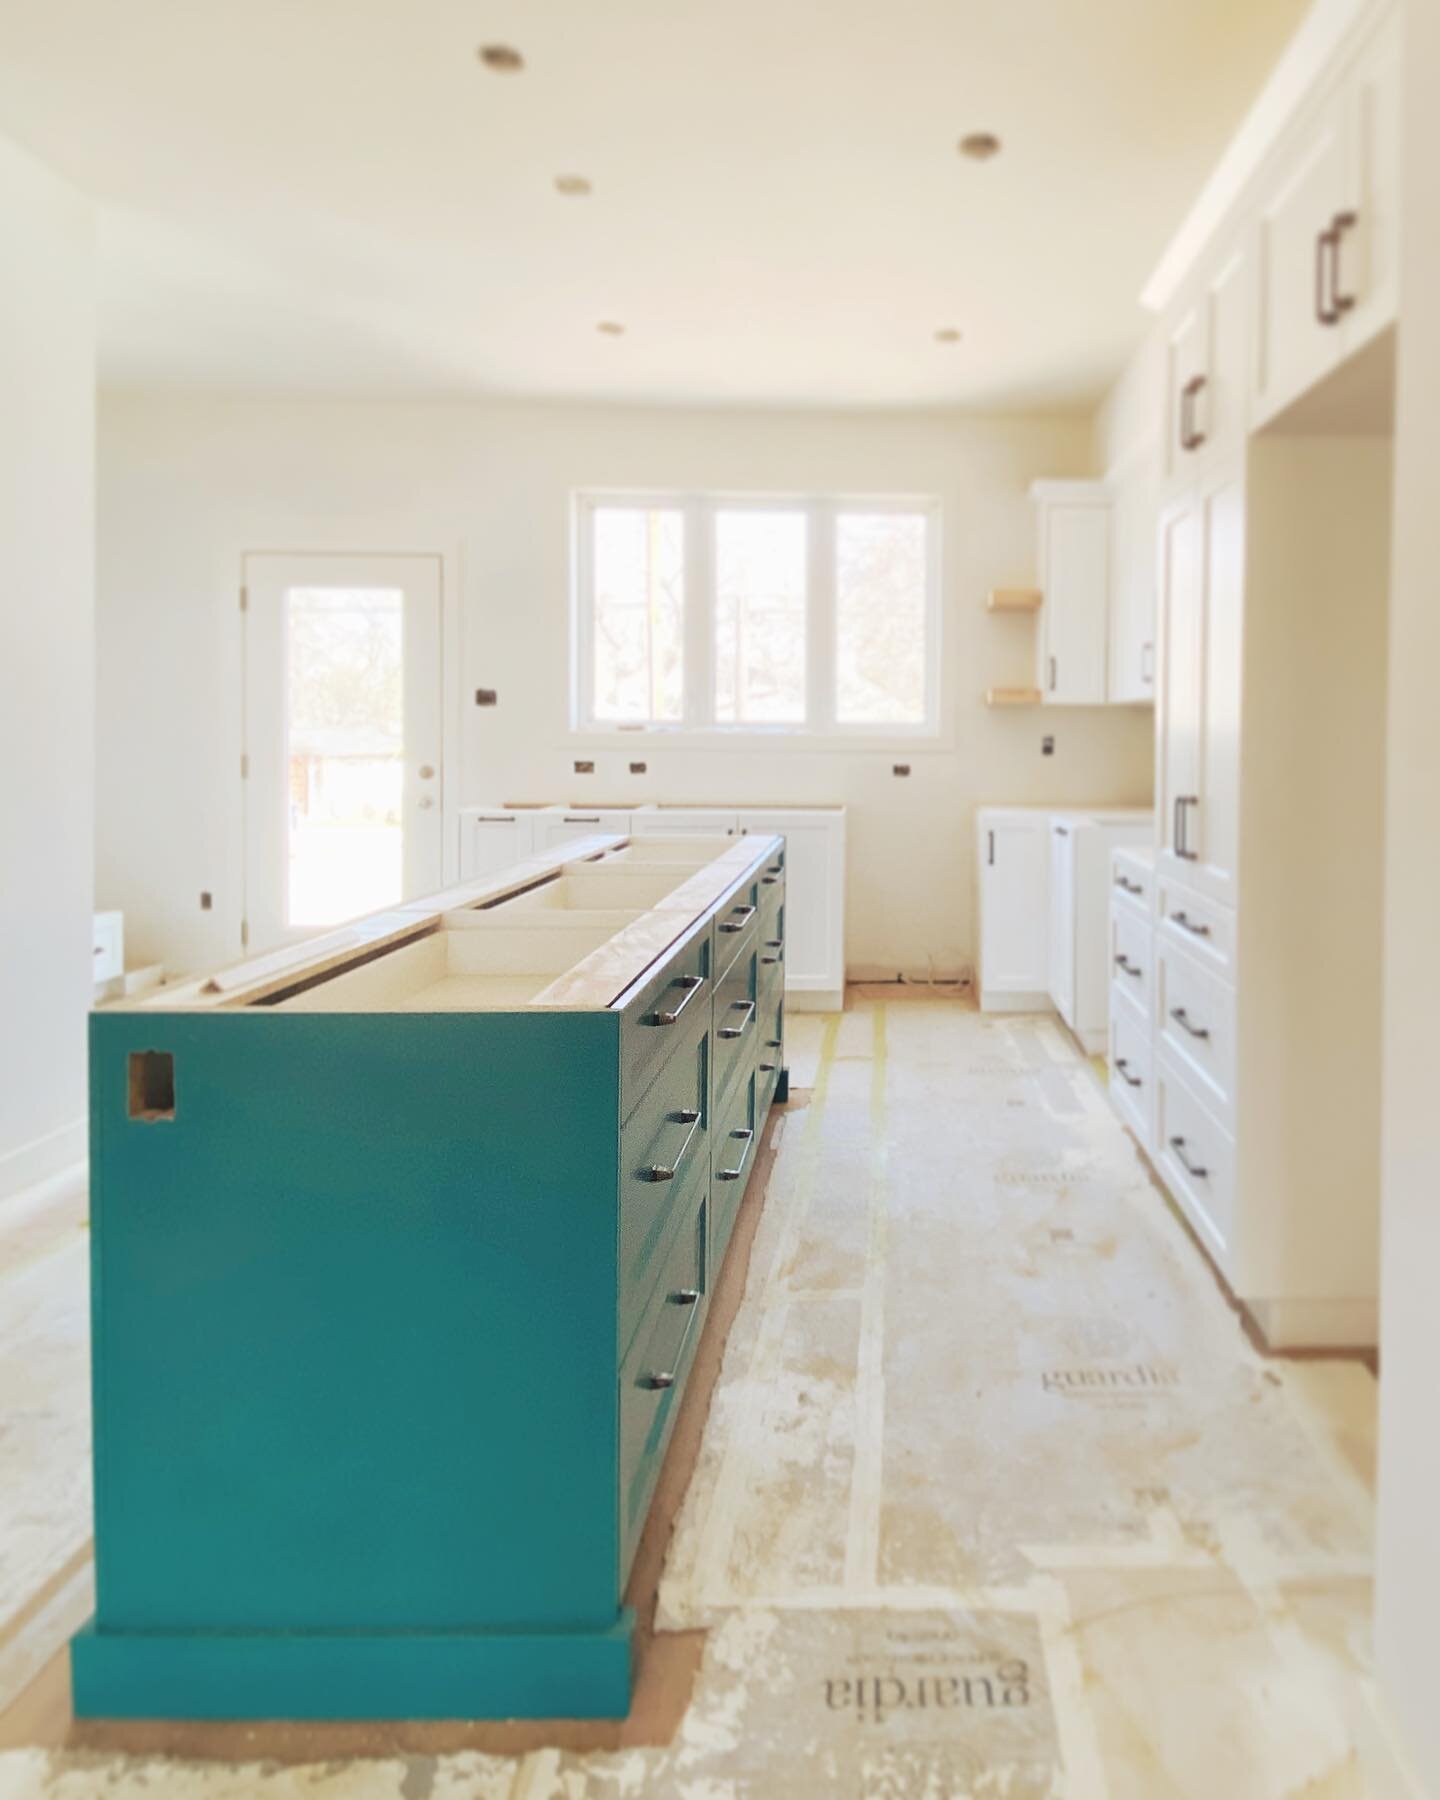 Loving the splash of colour on the kitchen island in our new #buenavistayxe build!

#islandliving #splashofcolour